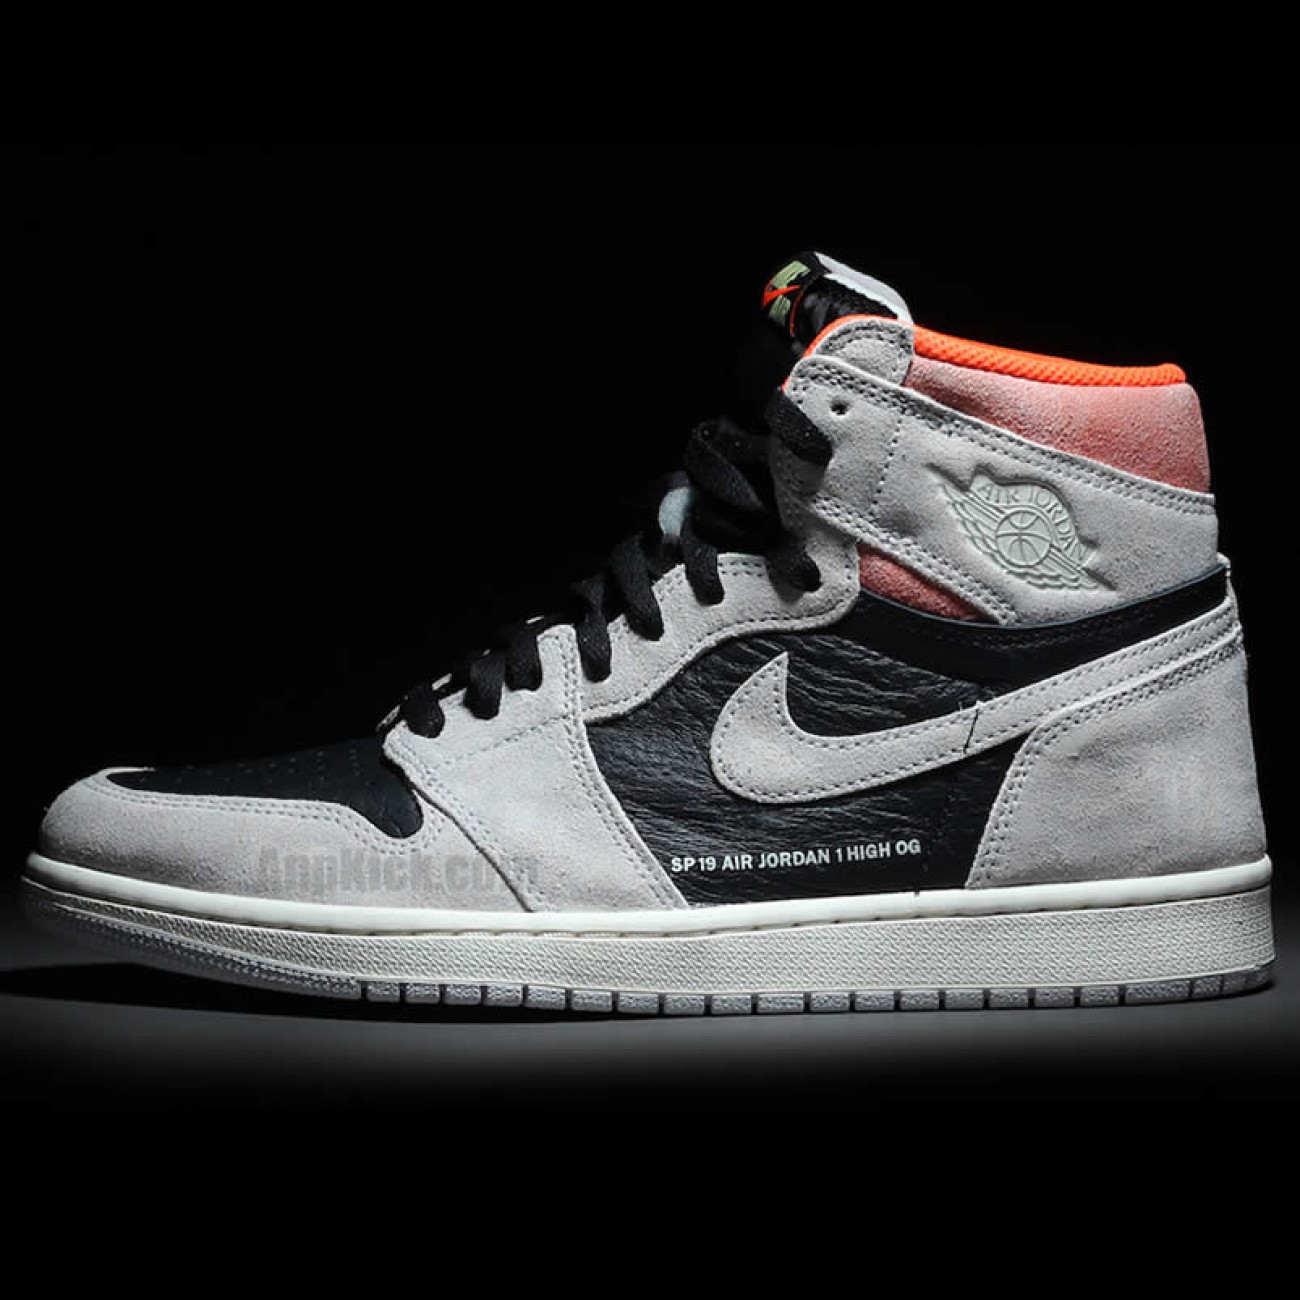 Air Jordan 1 Retro High OG "Neutral Grey" Shoes 555088-018